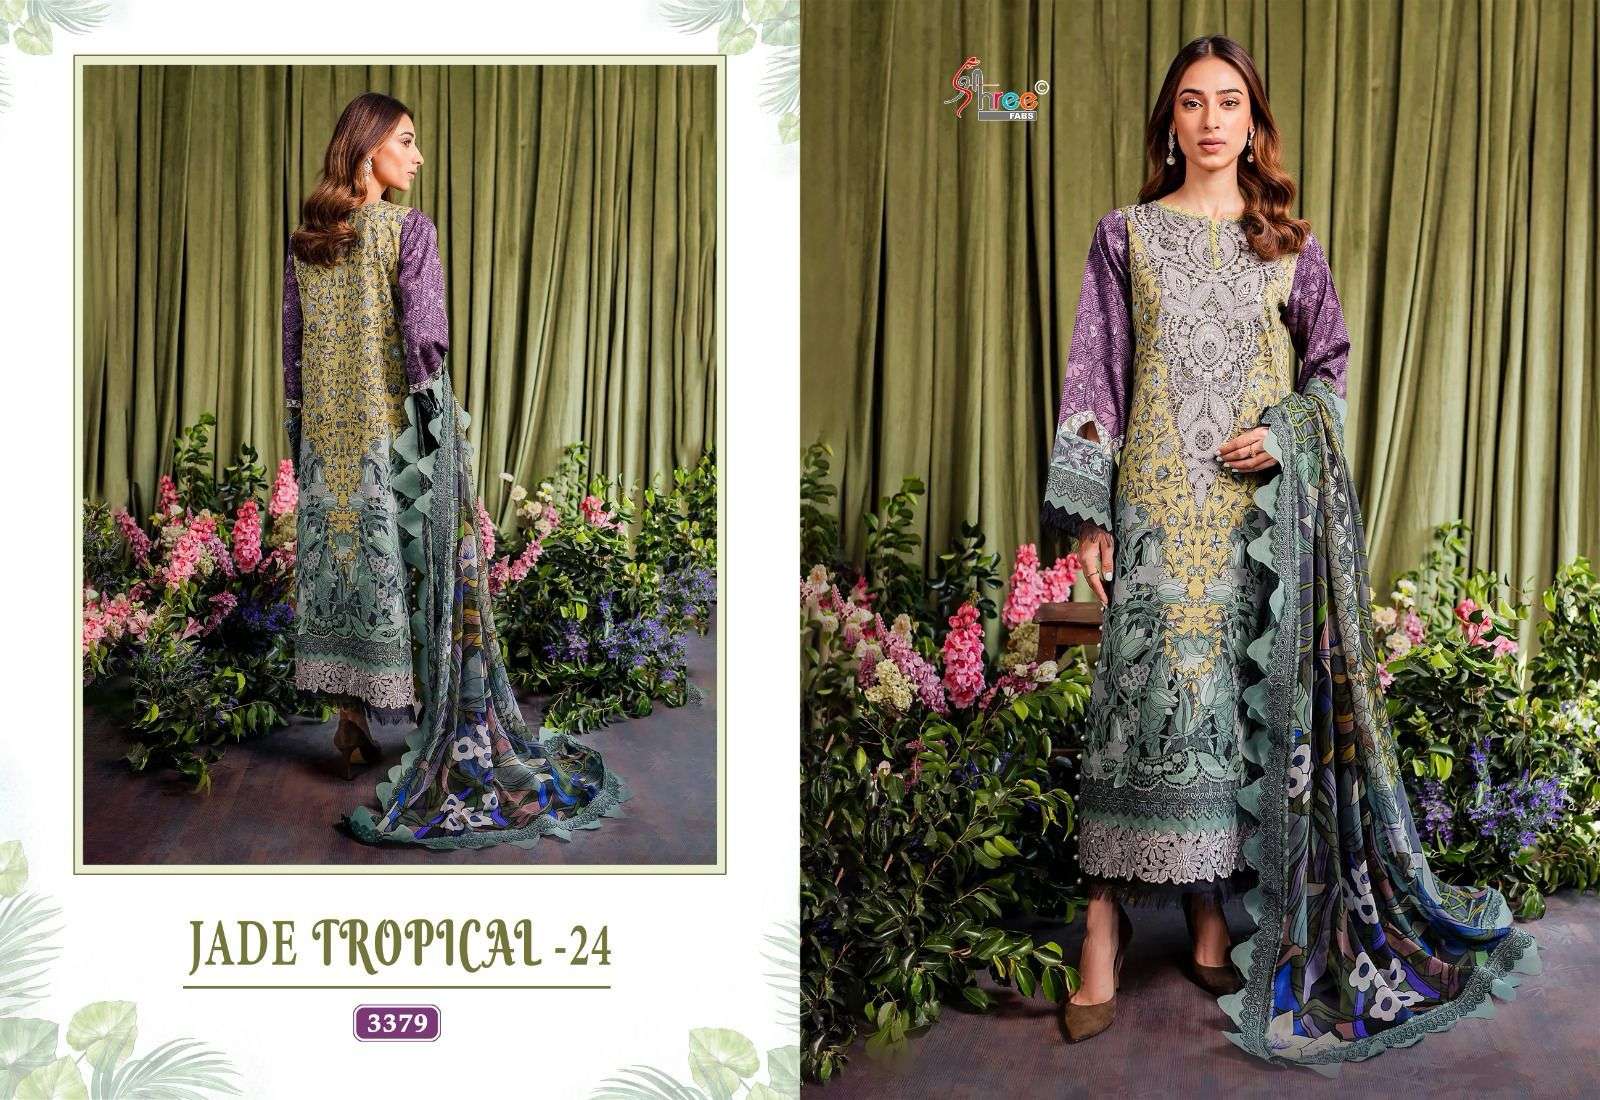 Shree Jade Tropical 24 Chiffon Dupatta Pakistani Suits Wholesale catalog